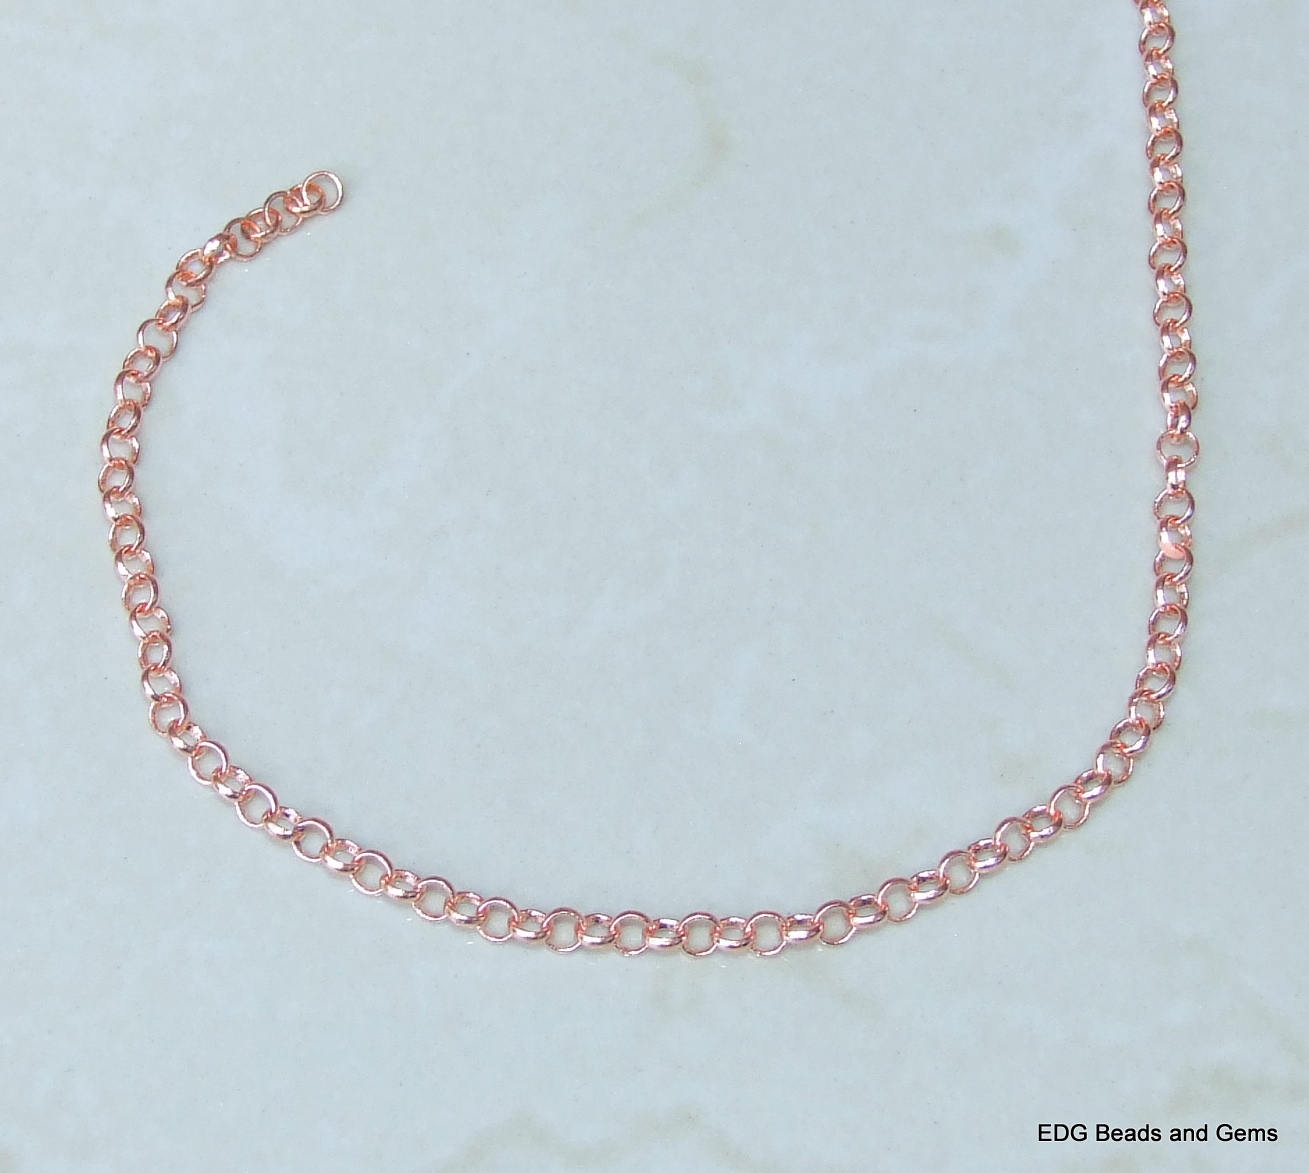 Copper Tone Chain, Rolo Chain, Jewelry Chain, Necklace Chain, Bronze Chain, Body Chain, Belly Chain, Bulk Chain, Jewelry Supplies, 4mm, 78RG